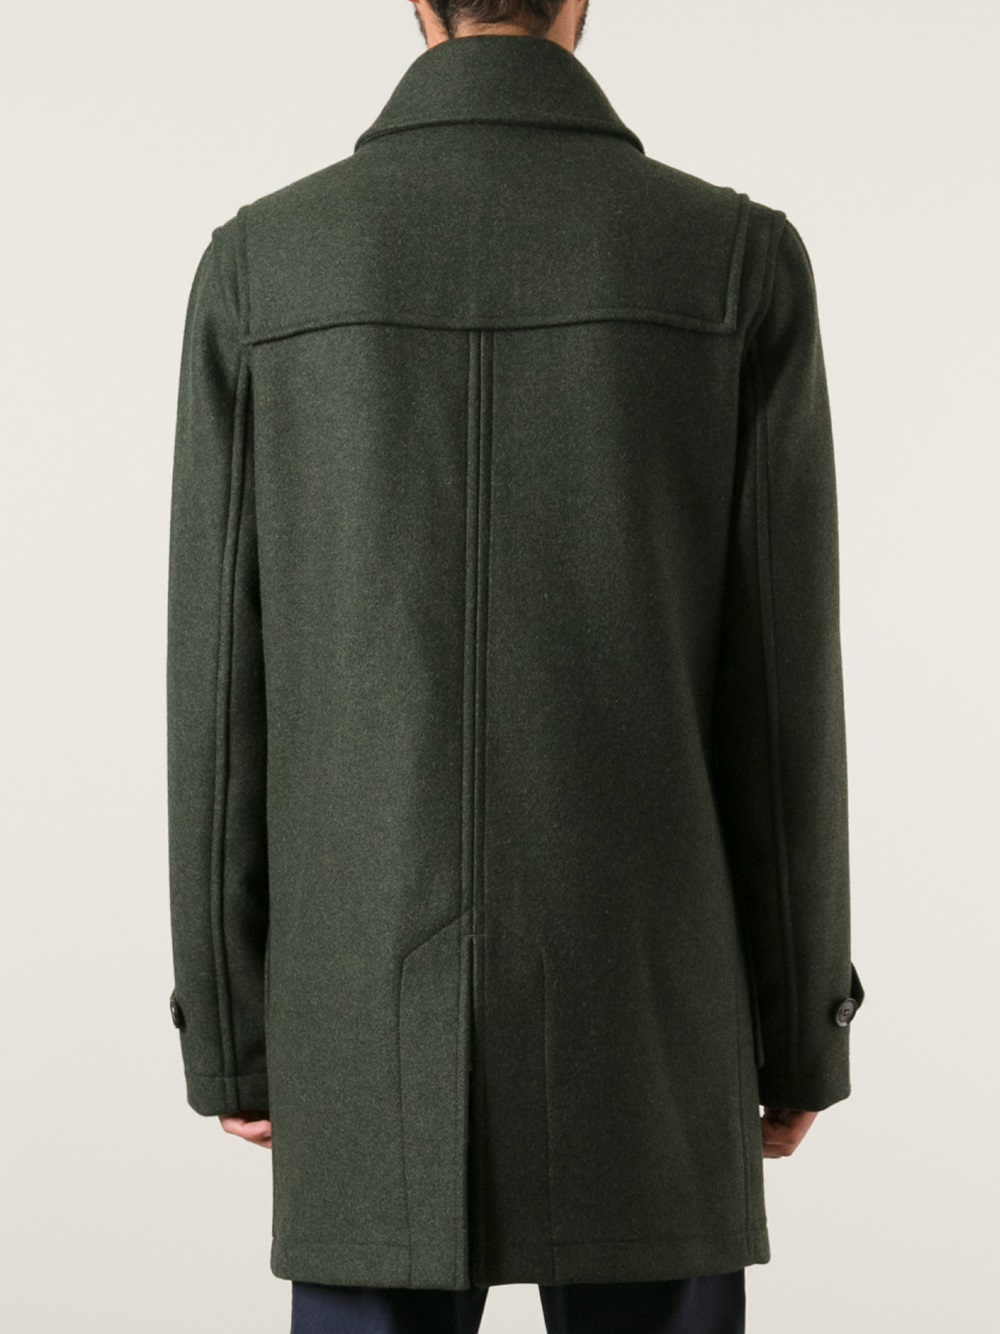 Lyst - Hardy Amies Duffle Coat in Green for Men